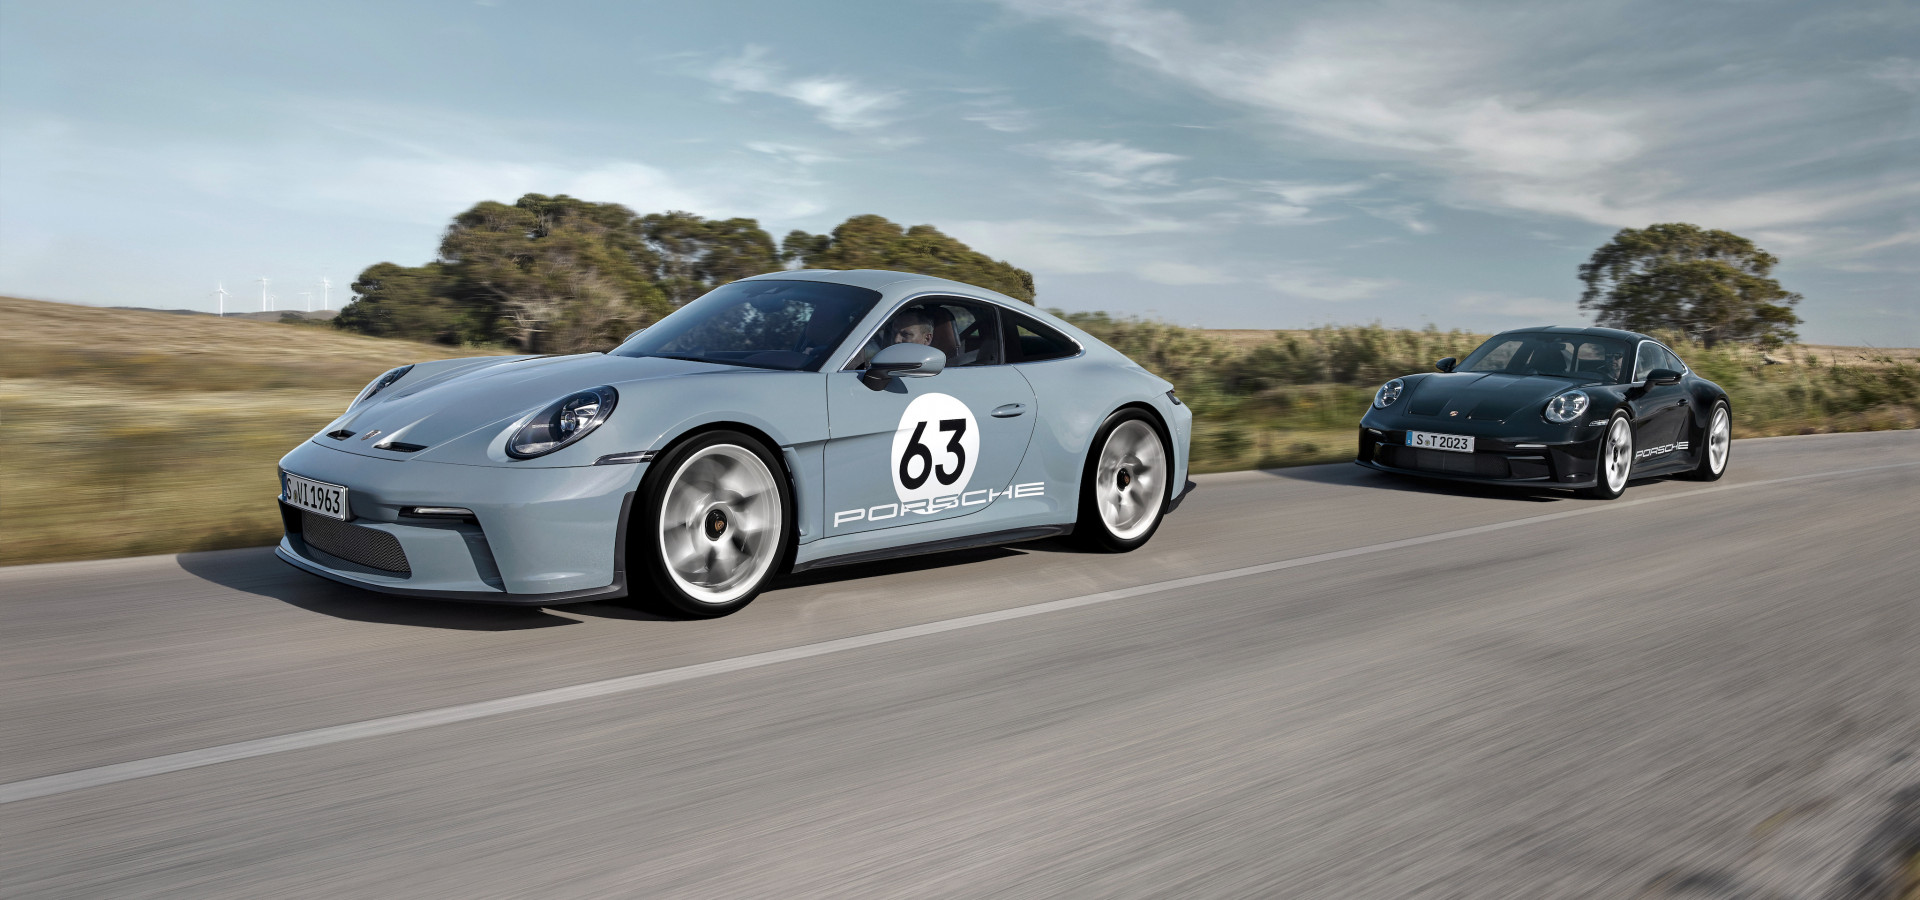 Īpašais 'Porsche 911 S/T' par godu modeļa 60 gadu jubilejai